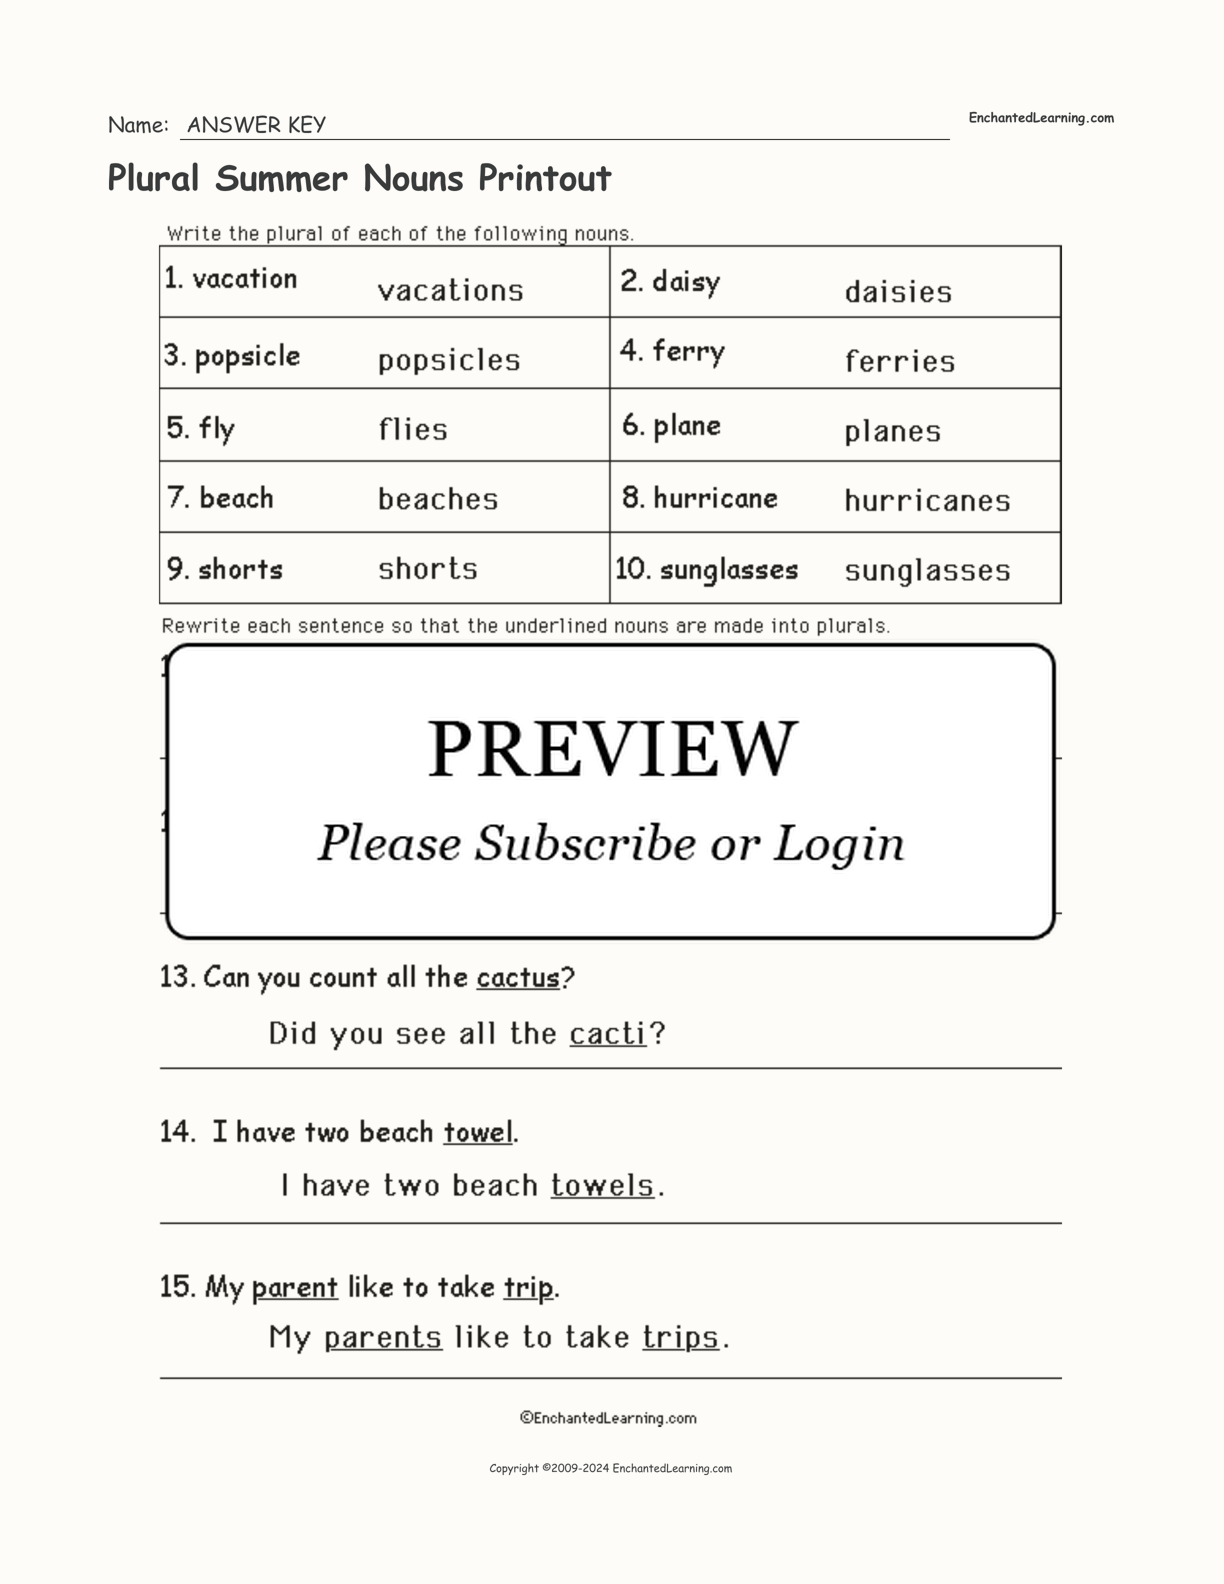 Plural Summer Nouns Printout interactive worksheet page 2